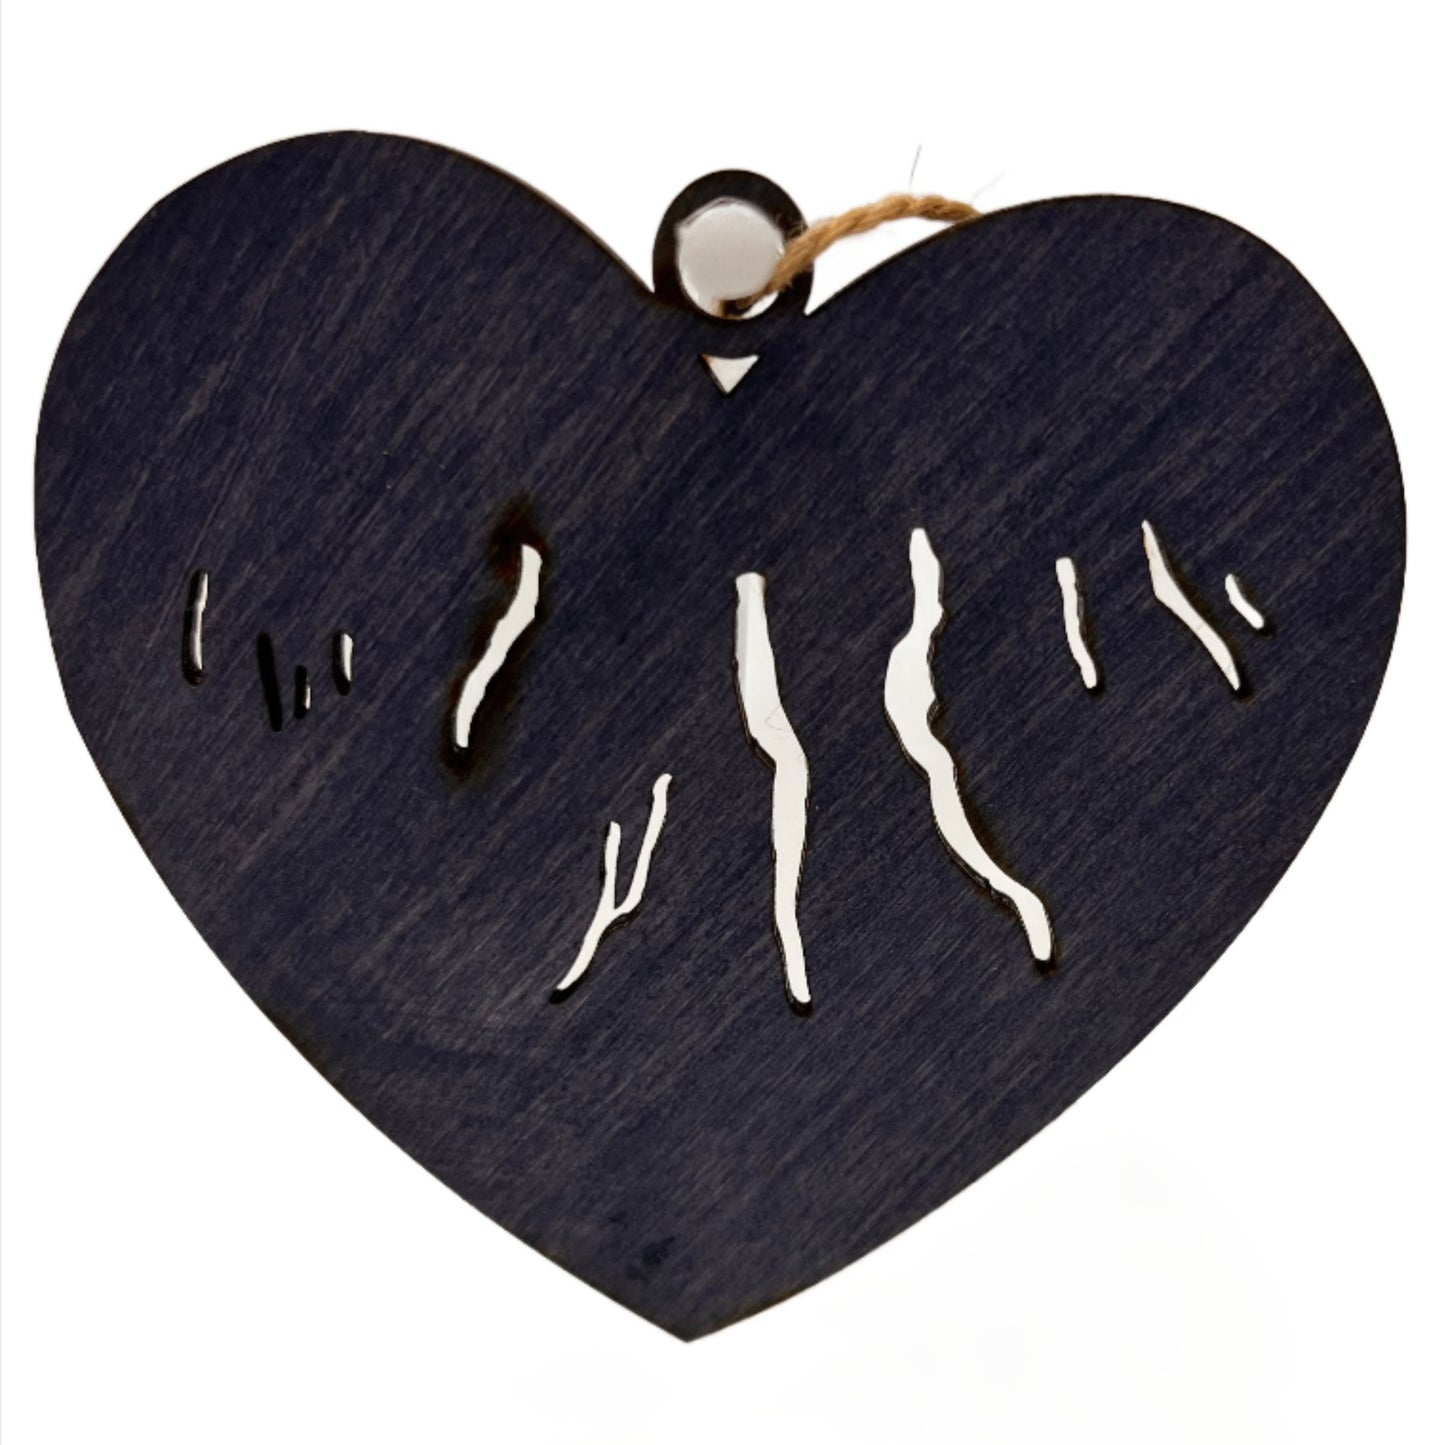 Finger Lakes Wooden Heart Ornament